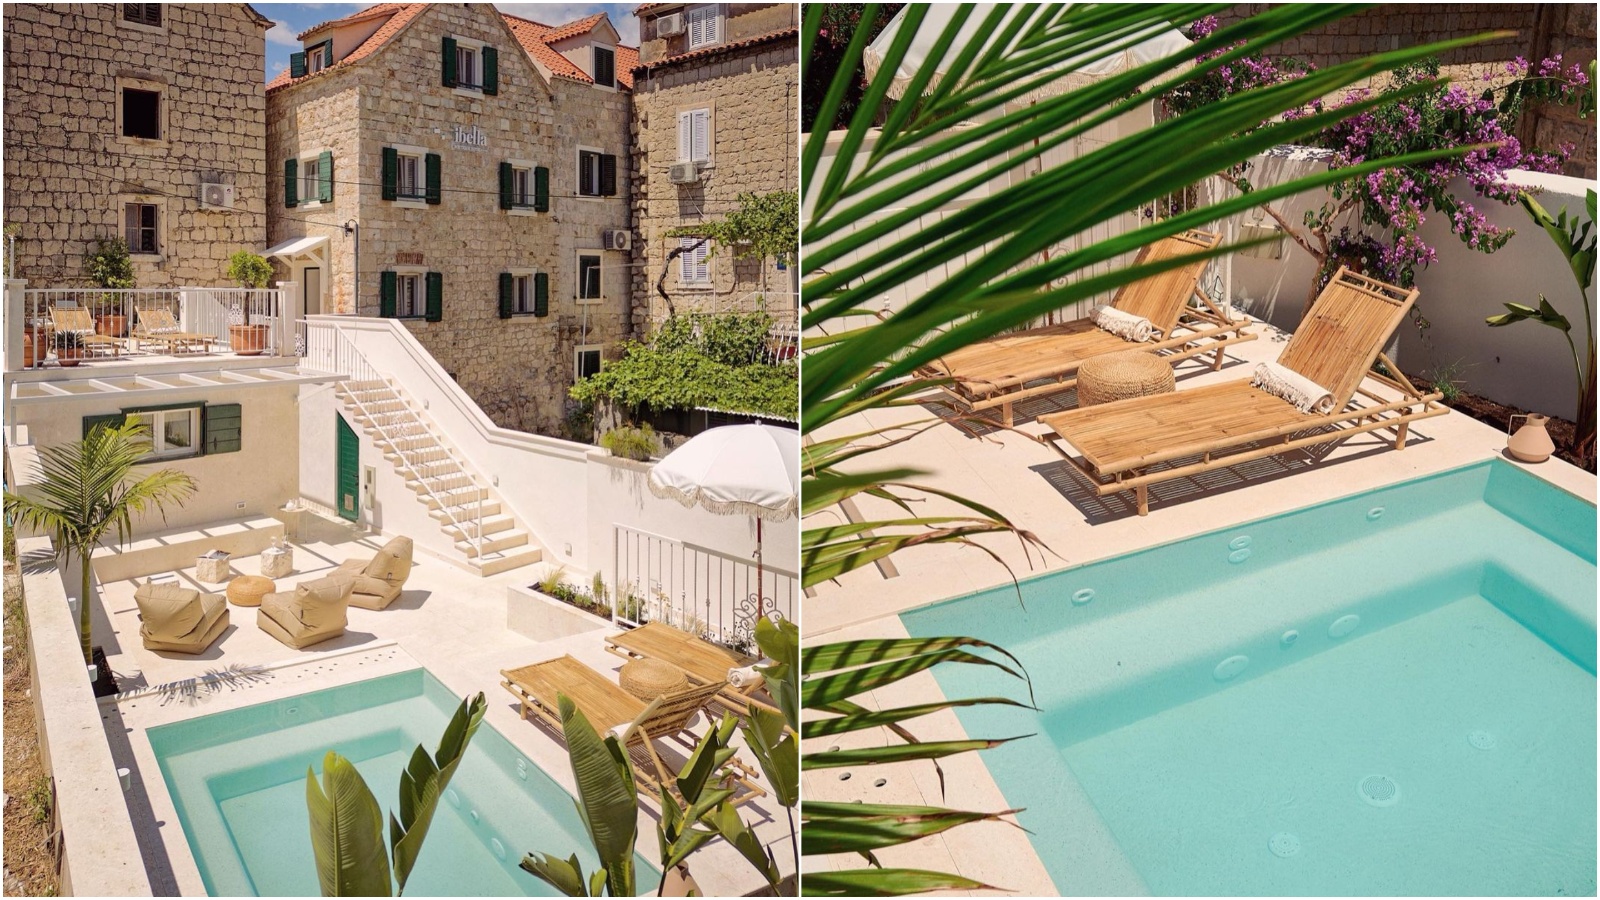 Ljetna oaza u centru Splita ima bazen stvoren za popodnevna druženja